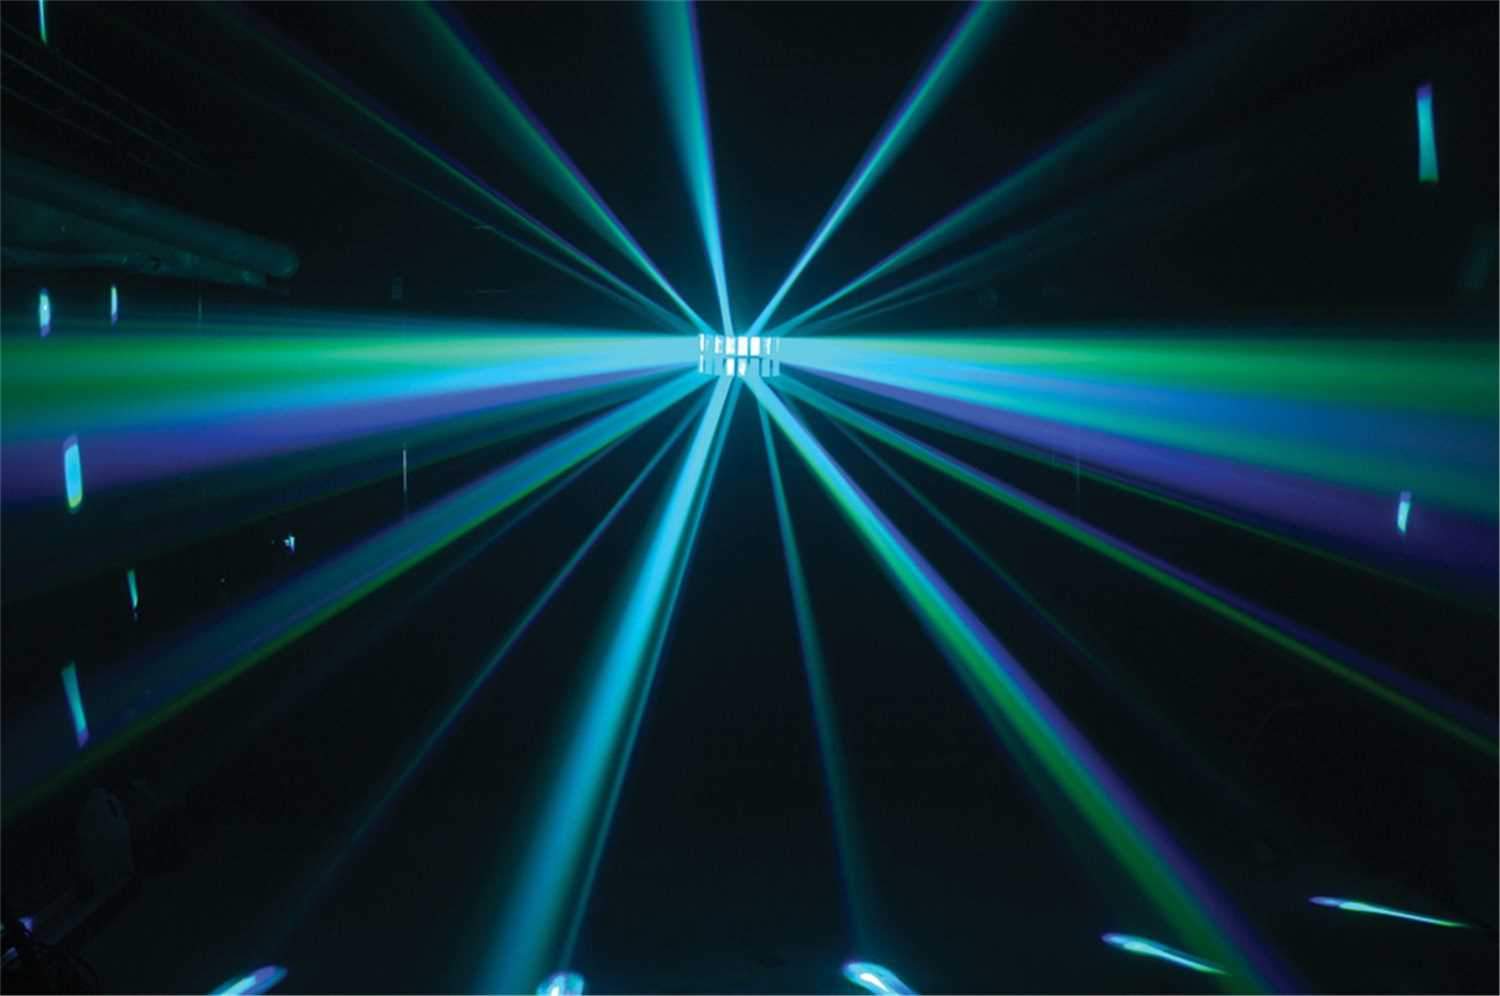 American DJ Agressor Q4 LED Effect Light - ProSound and Stage Lighting